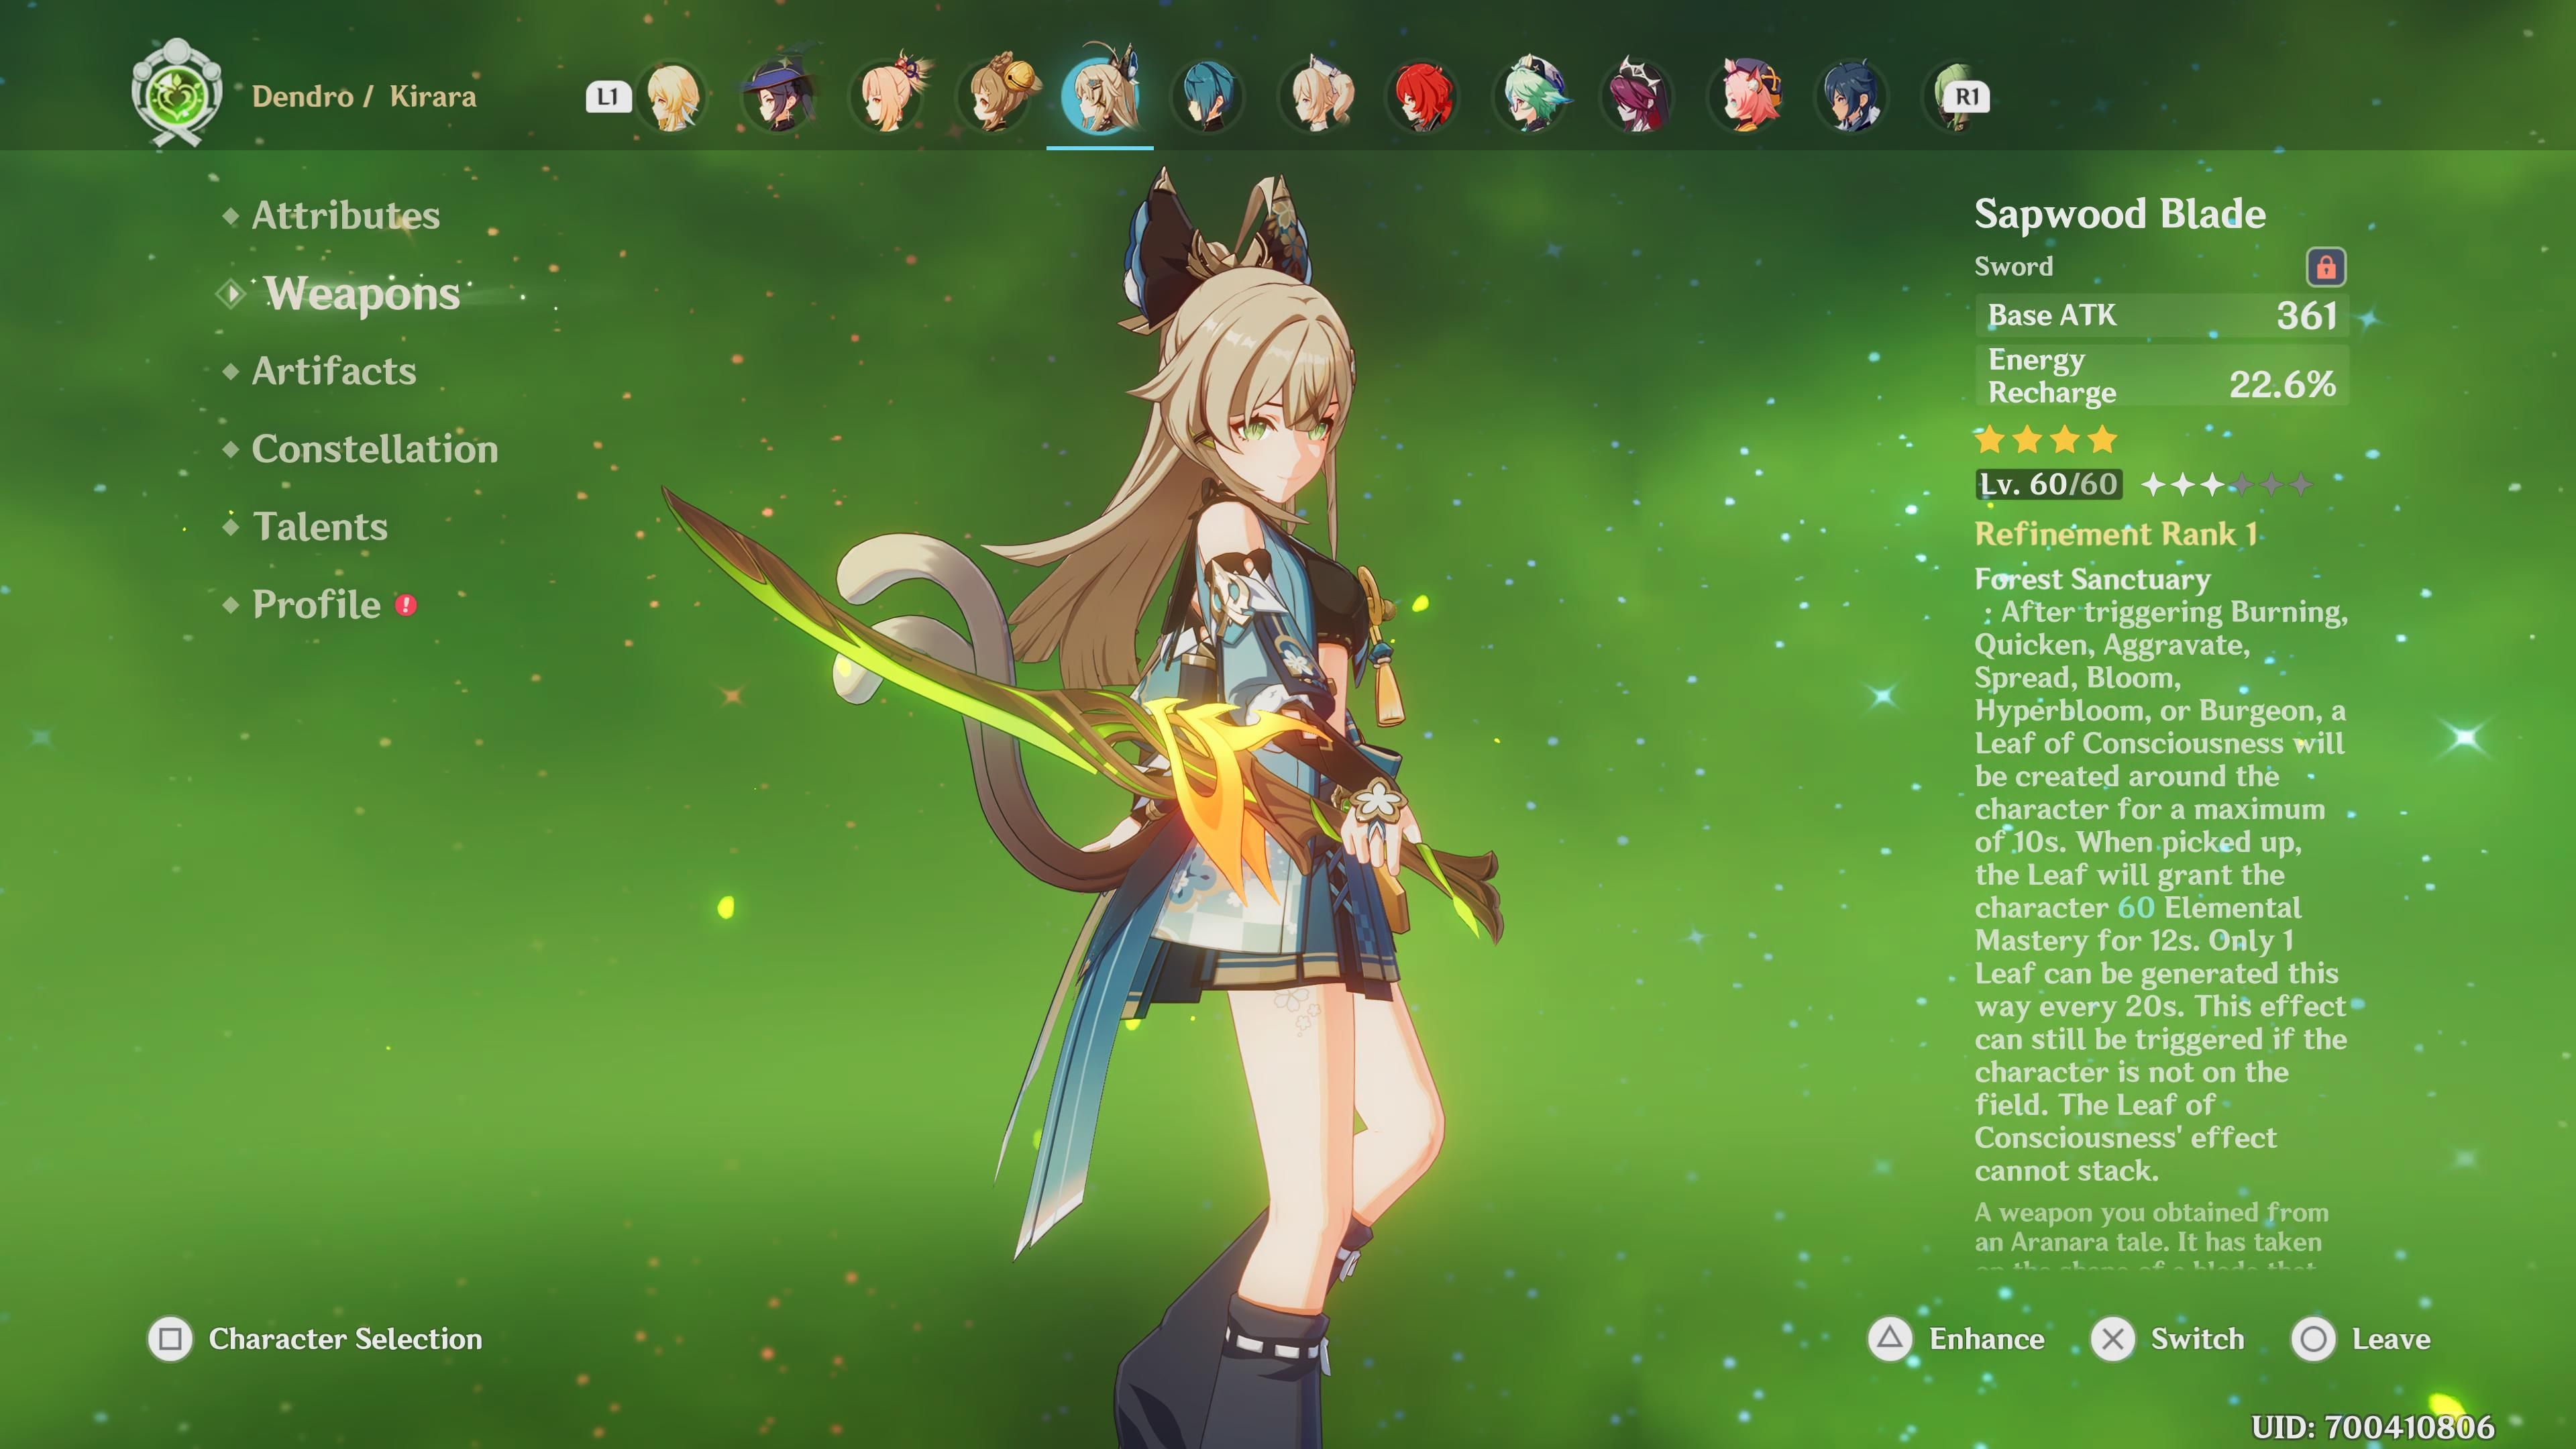 Genshin Impact - Kirara poses with a sapwood blade on the character screen